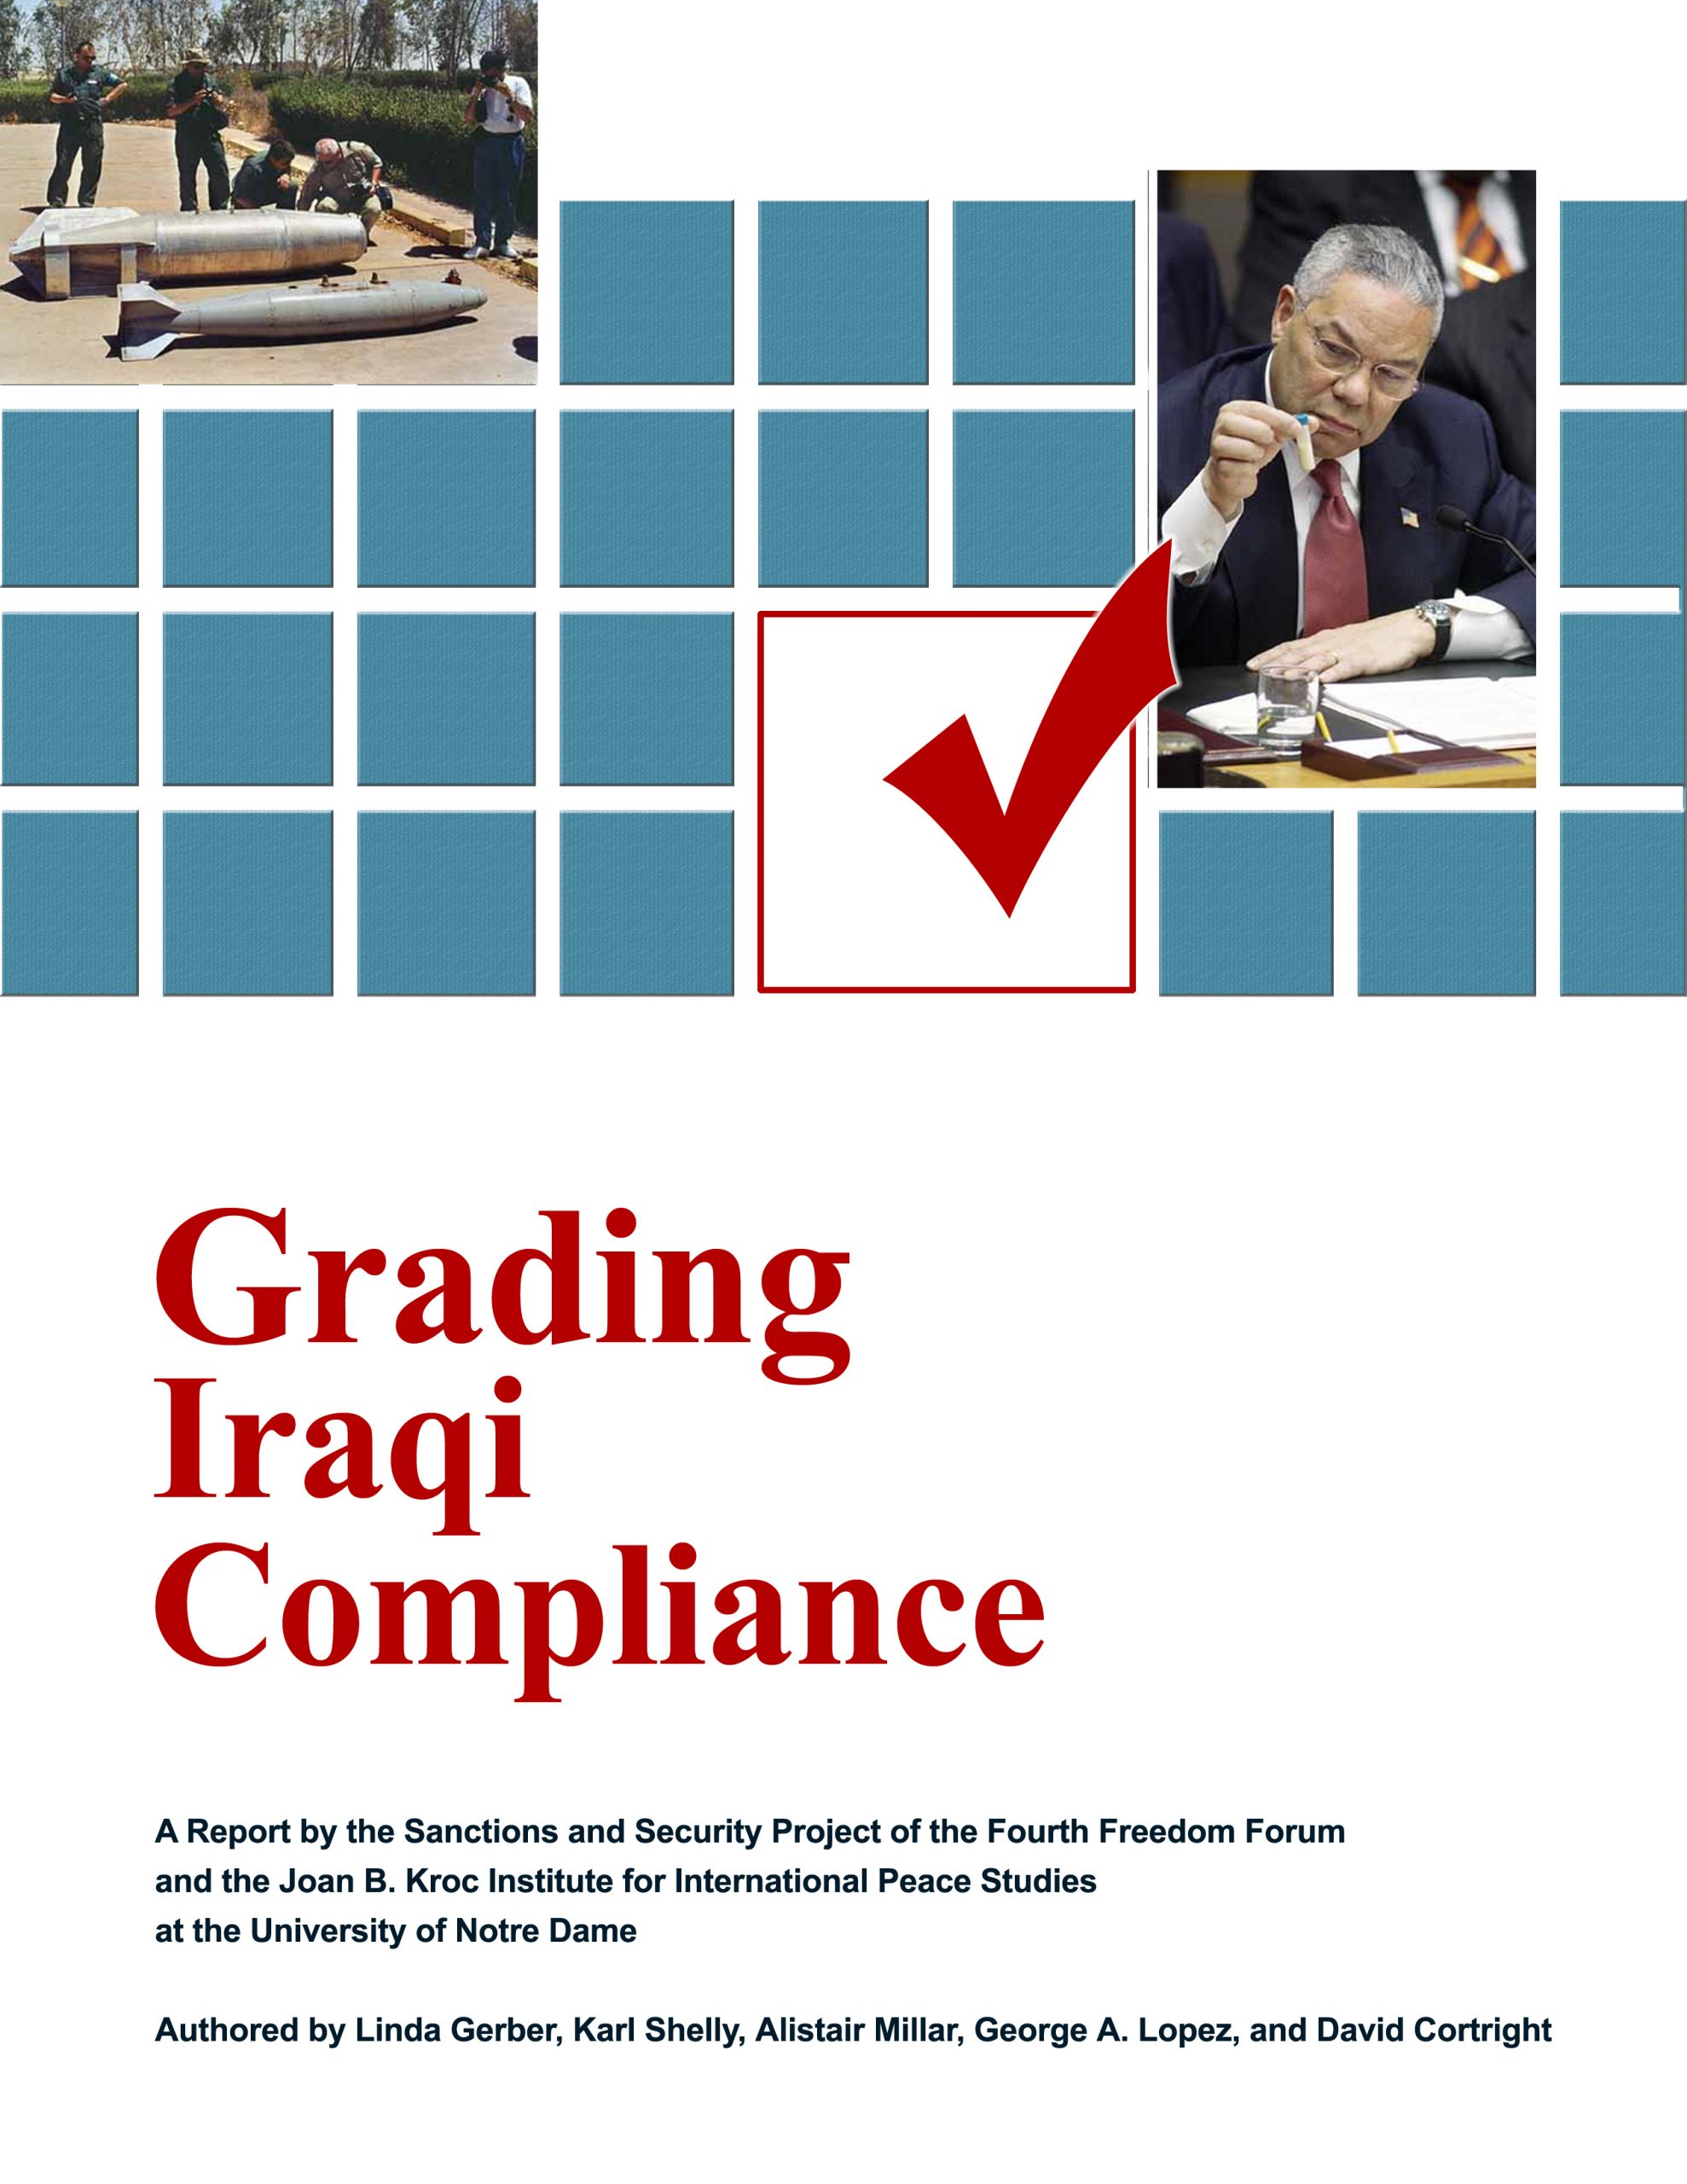 Grading Iraqi Compliance